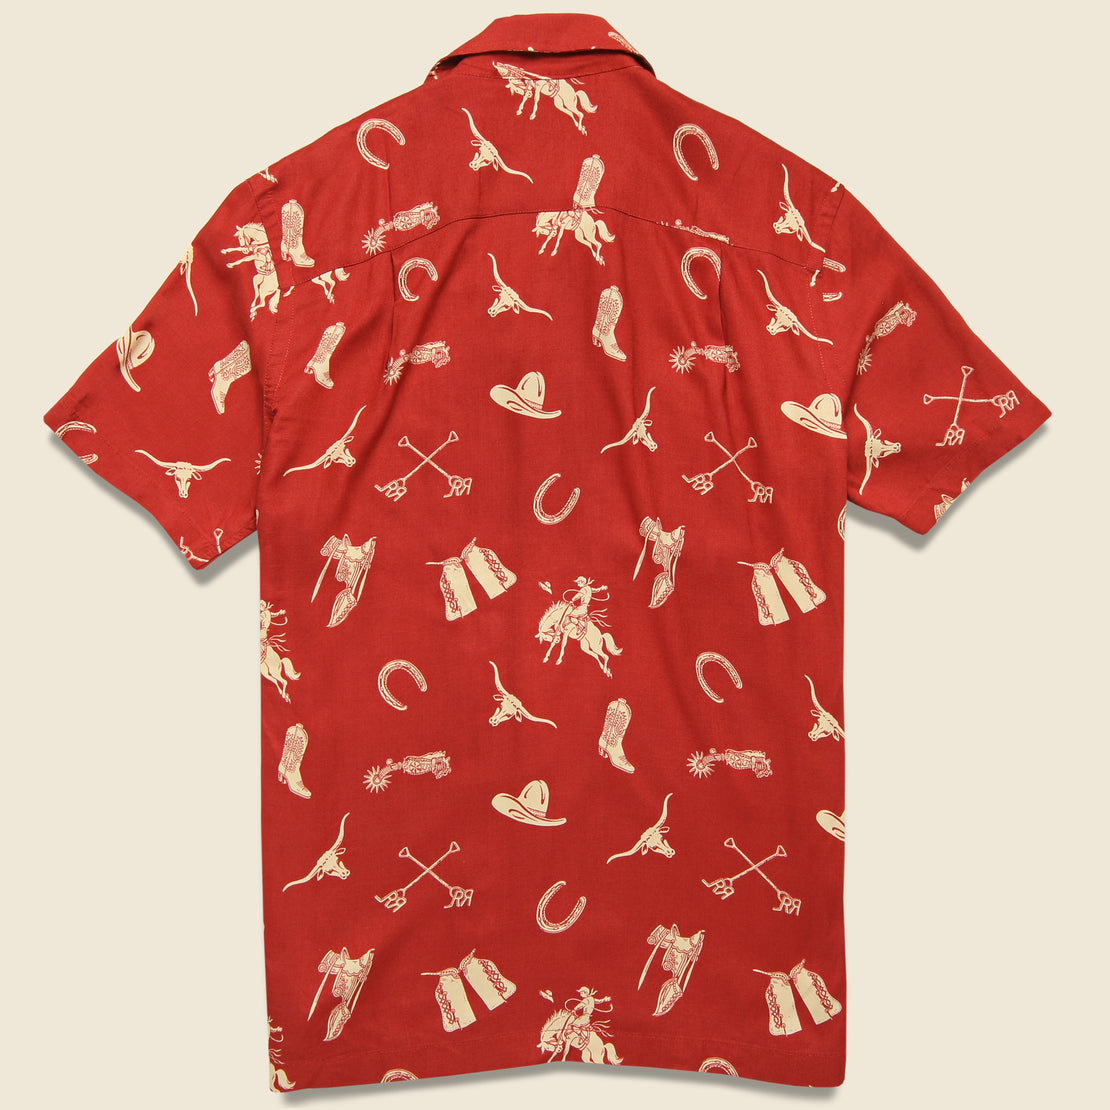 Western Print Rayon Camp Shirt - Red/Cream